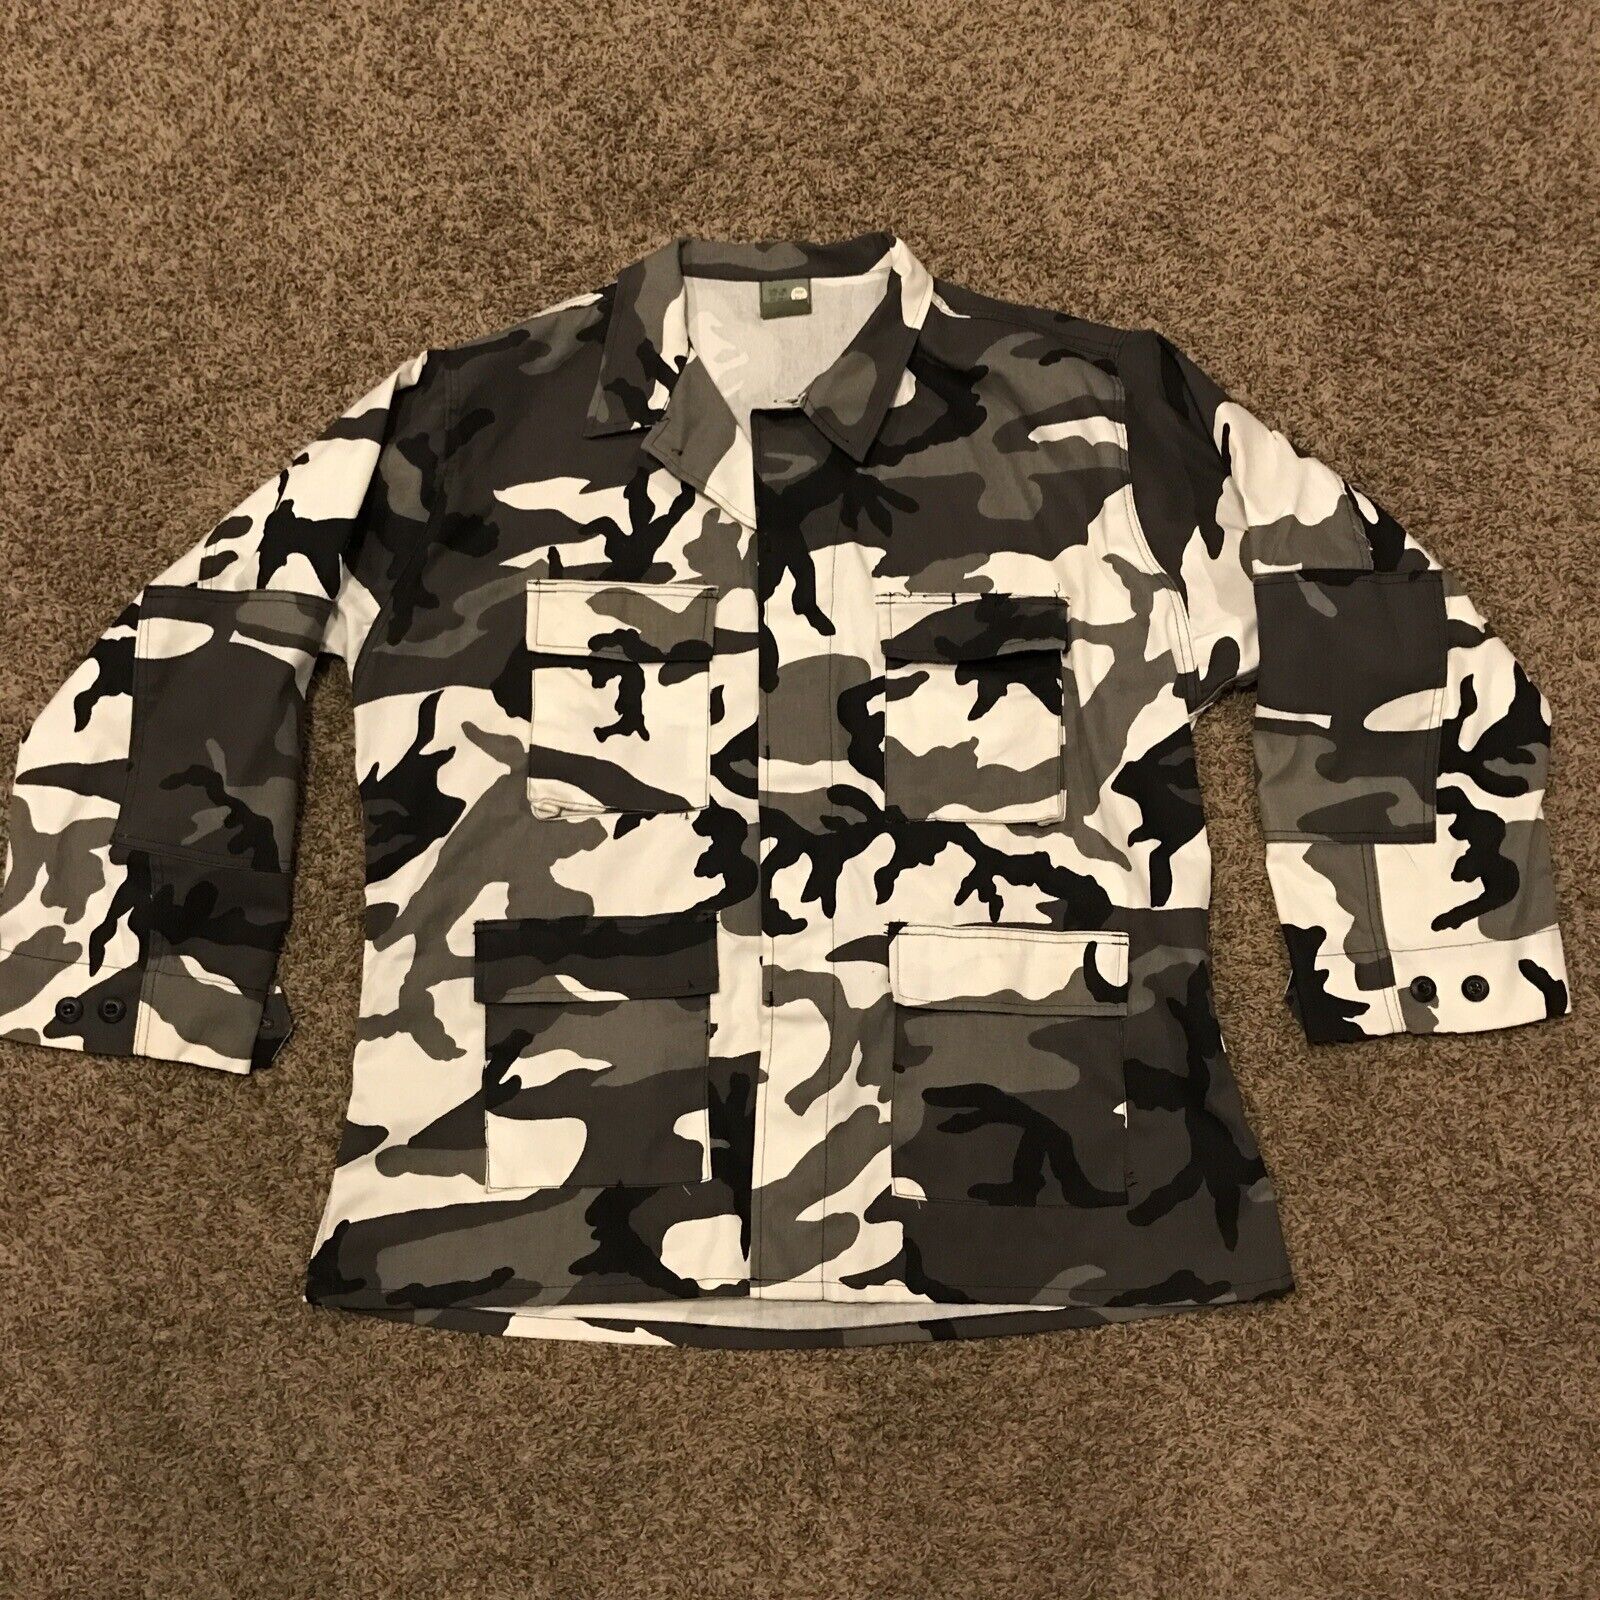 TRU-SPEC  Woodland BLACK WHITE CAMO Camouflage Jacket Top XL Long B20